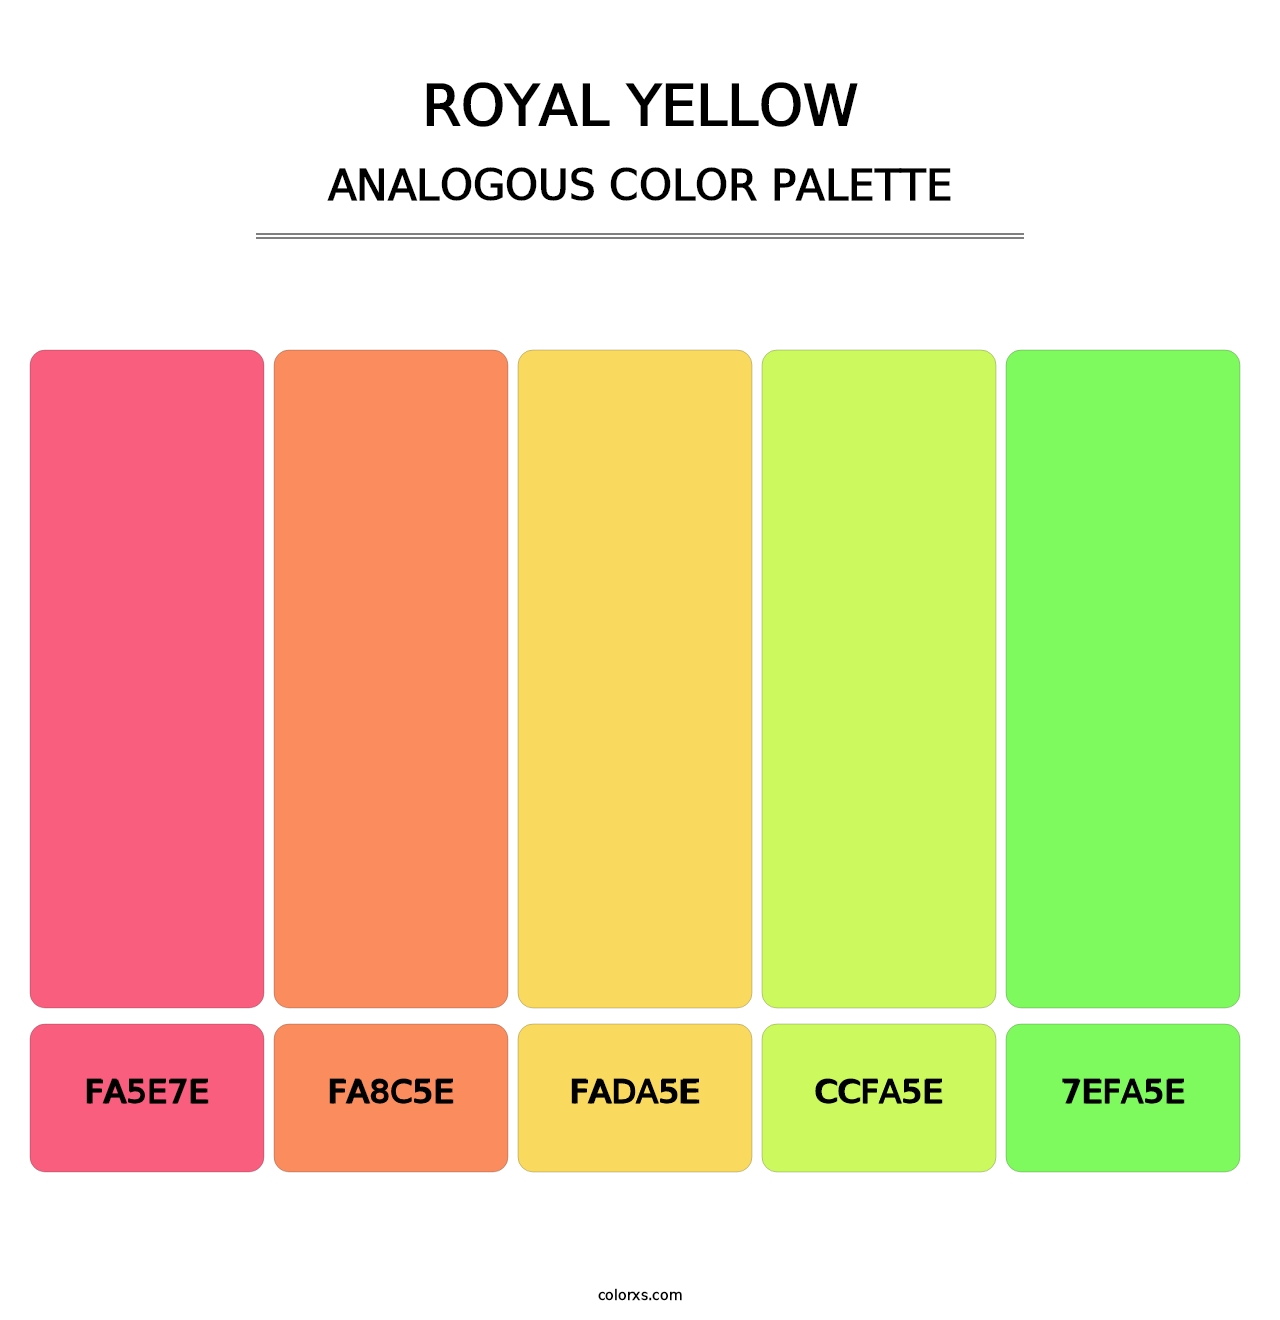 Royal Yellow - Analogous Color Palette